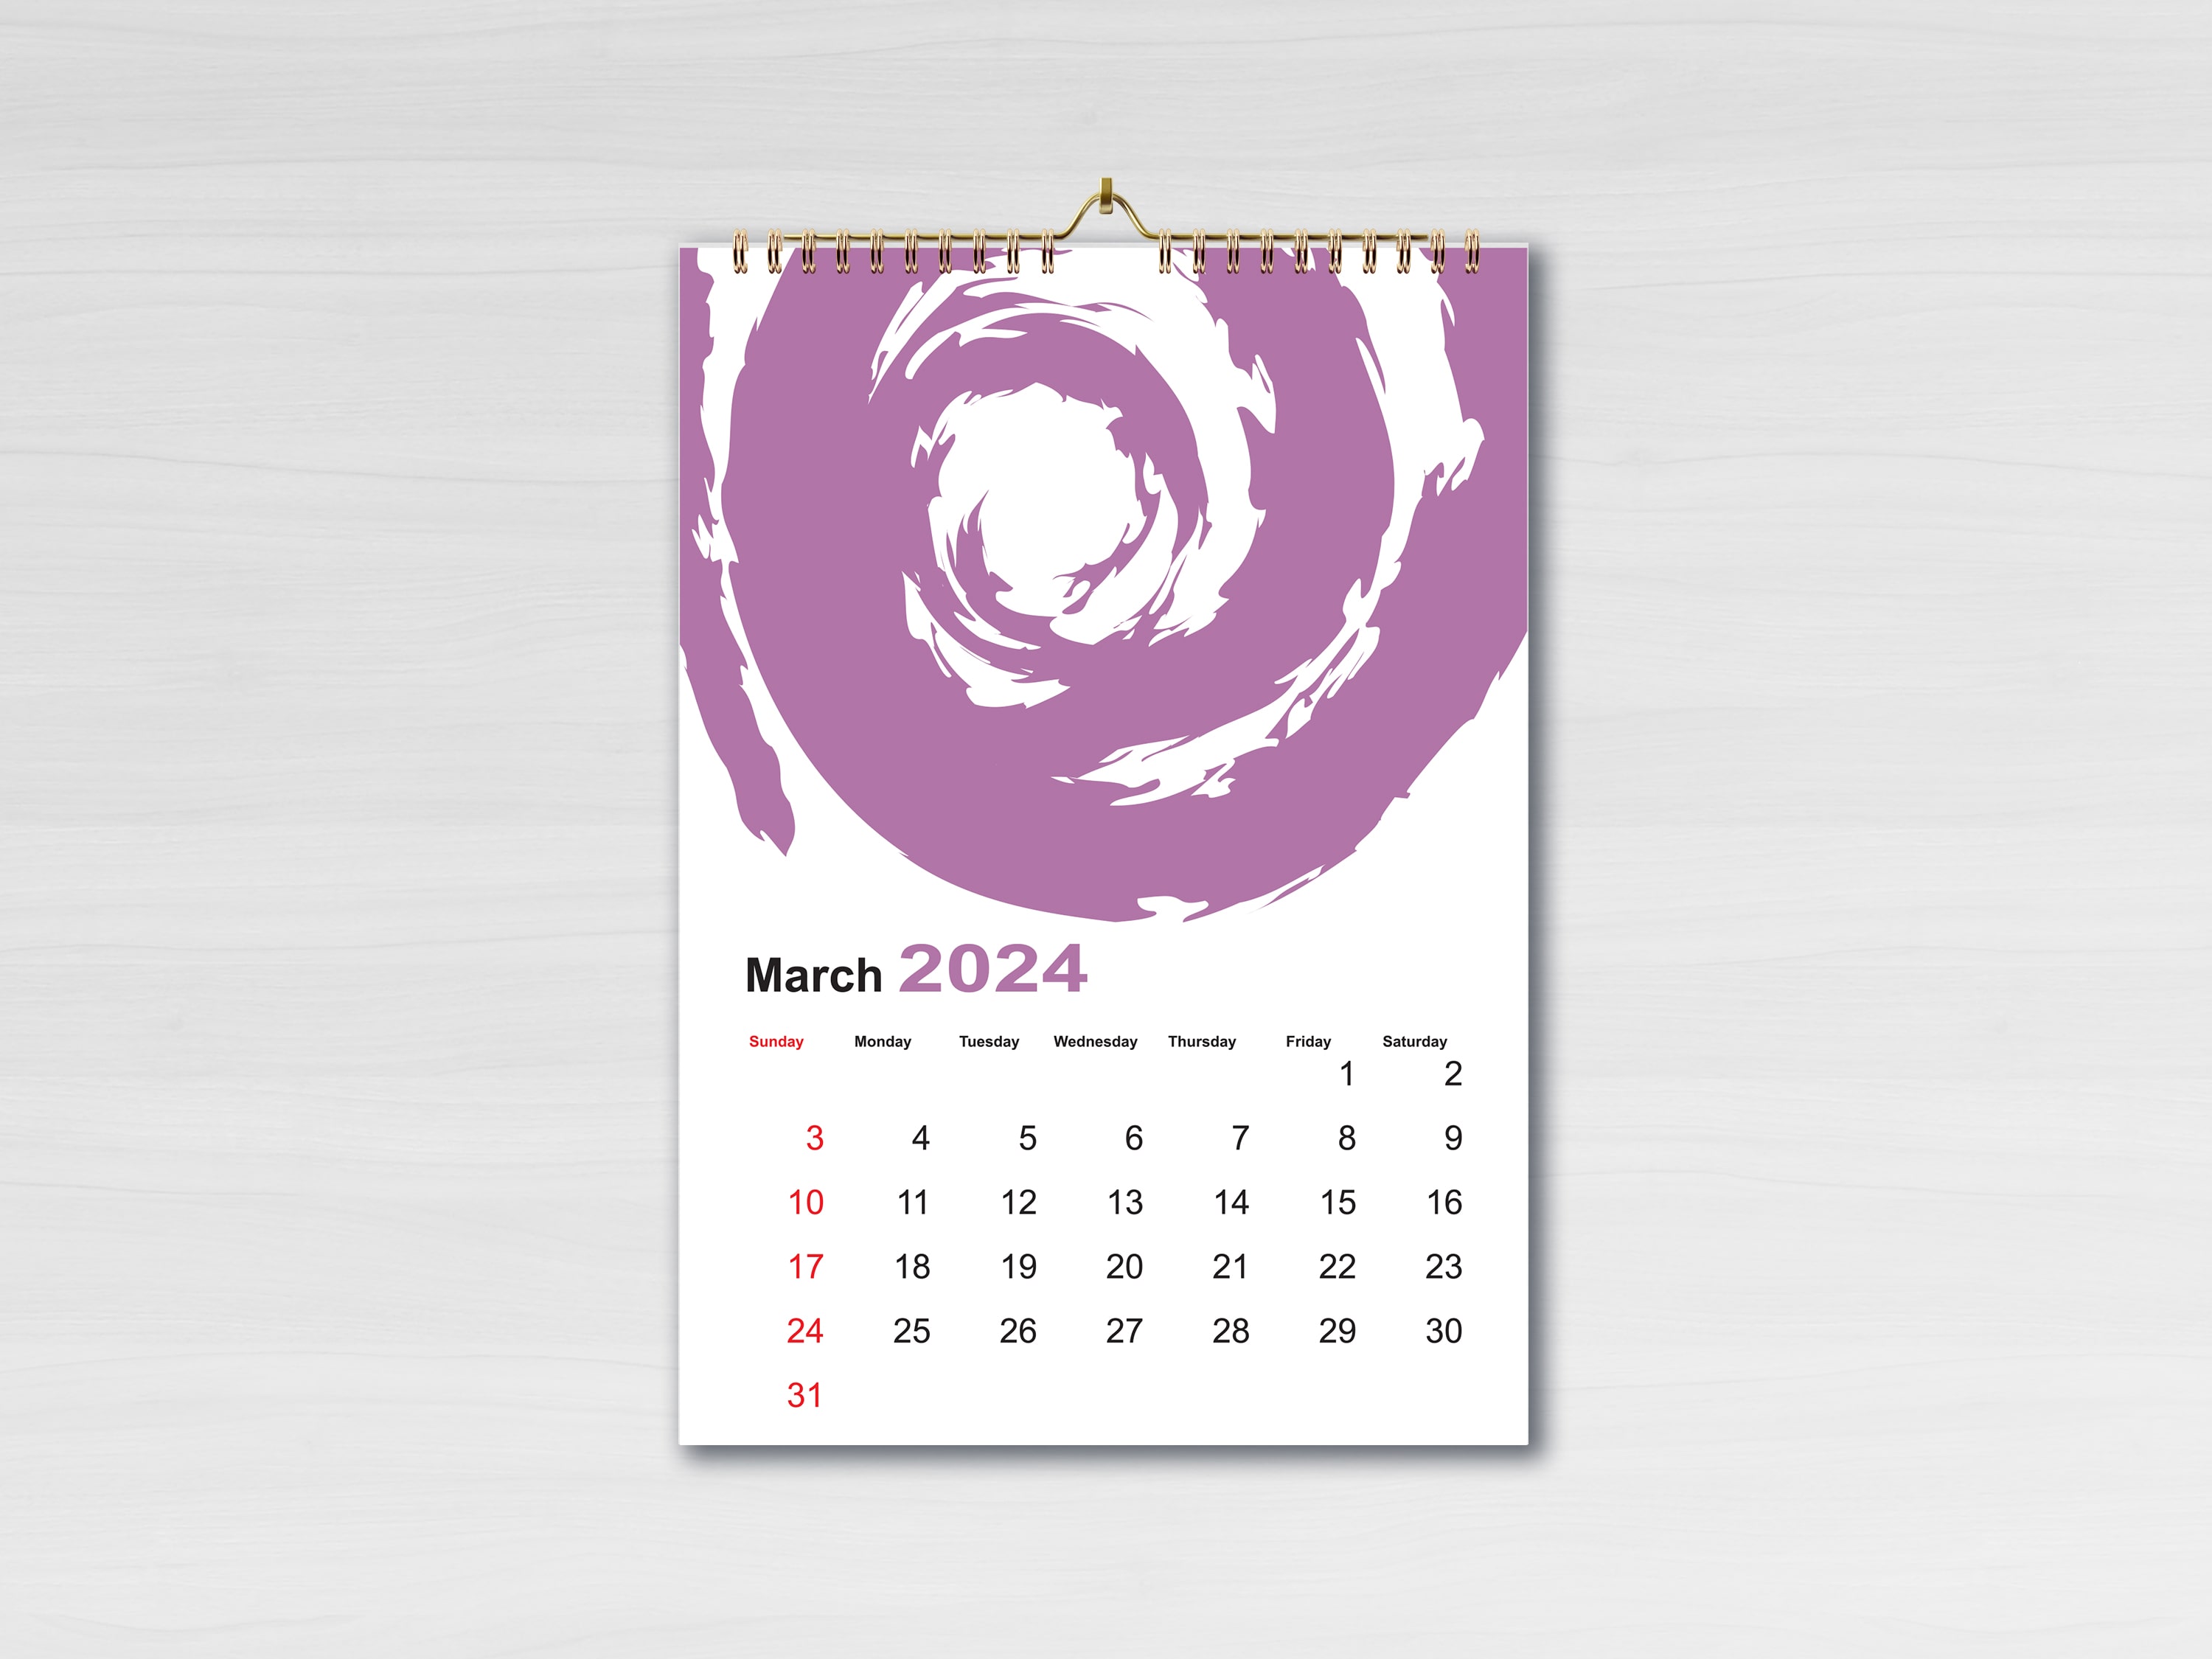 Desk Calendar 2024 Template - MasterBundles